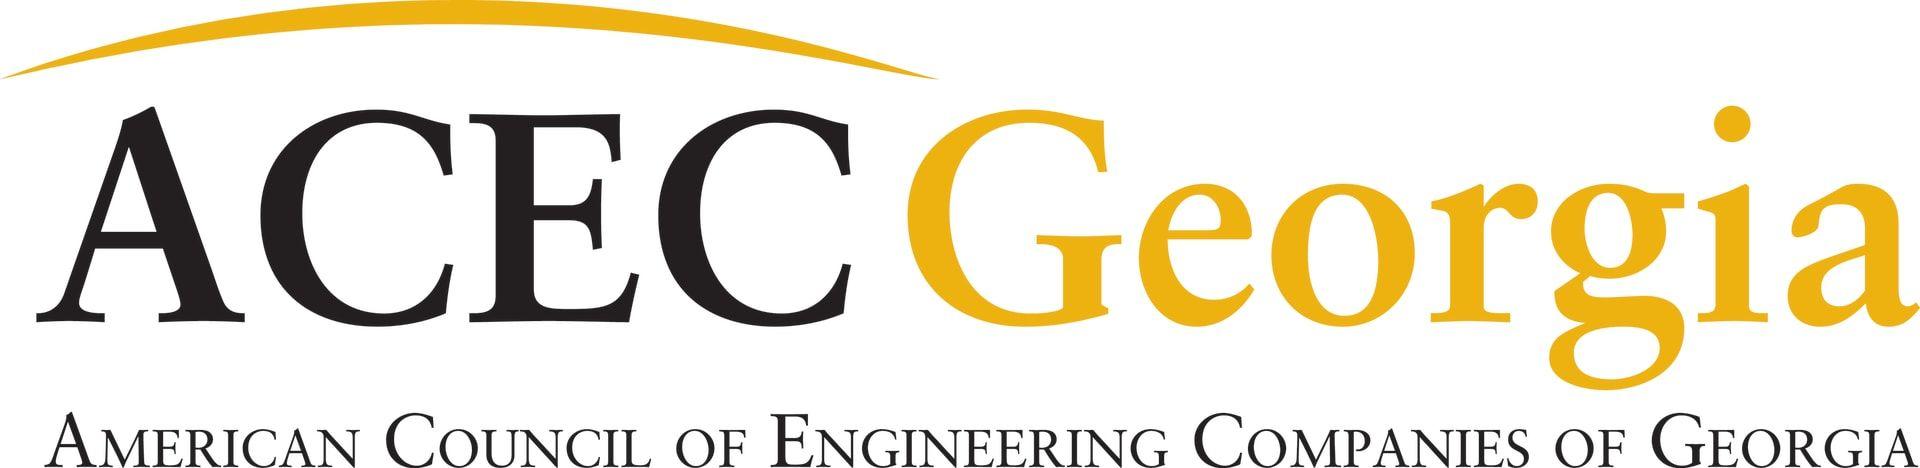 ACEC Logo - Home - American Council of Engineering Companies of Georgia, GA